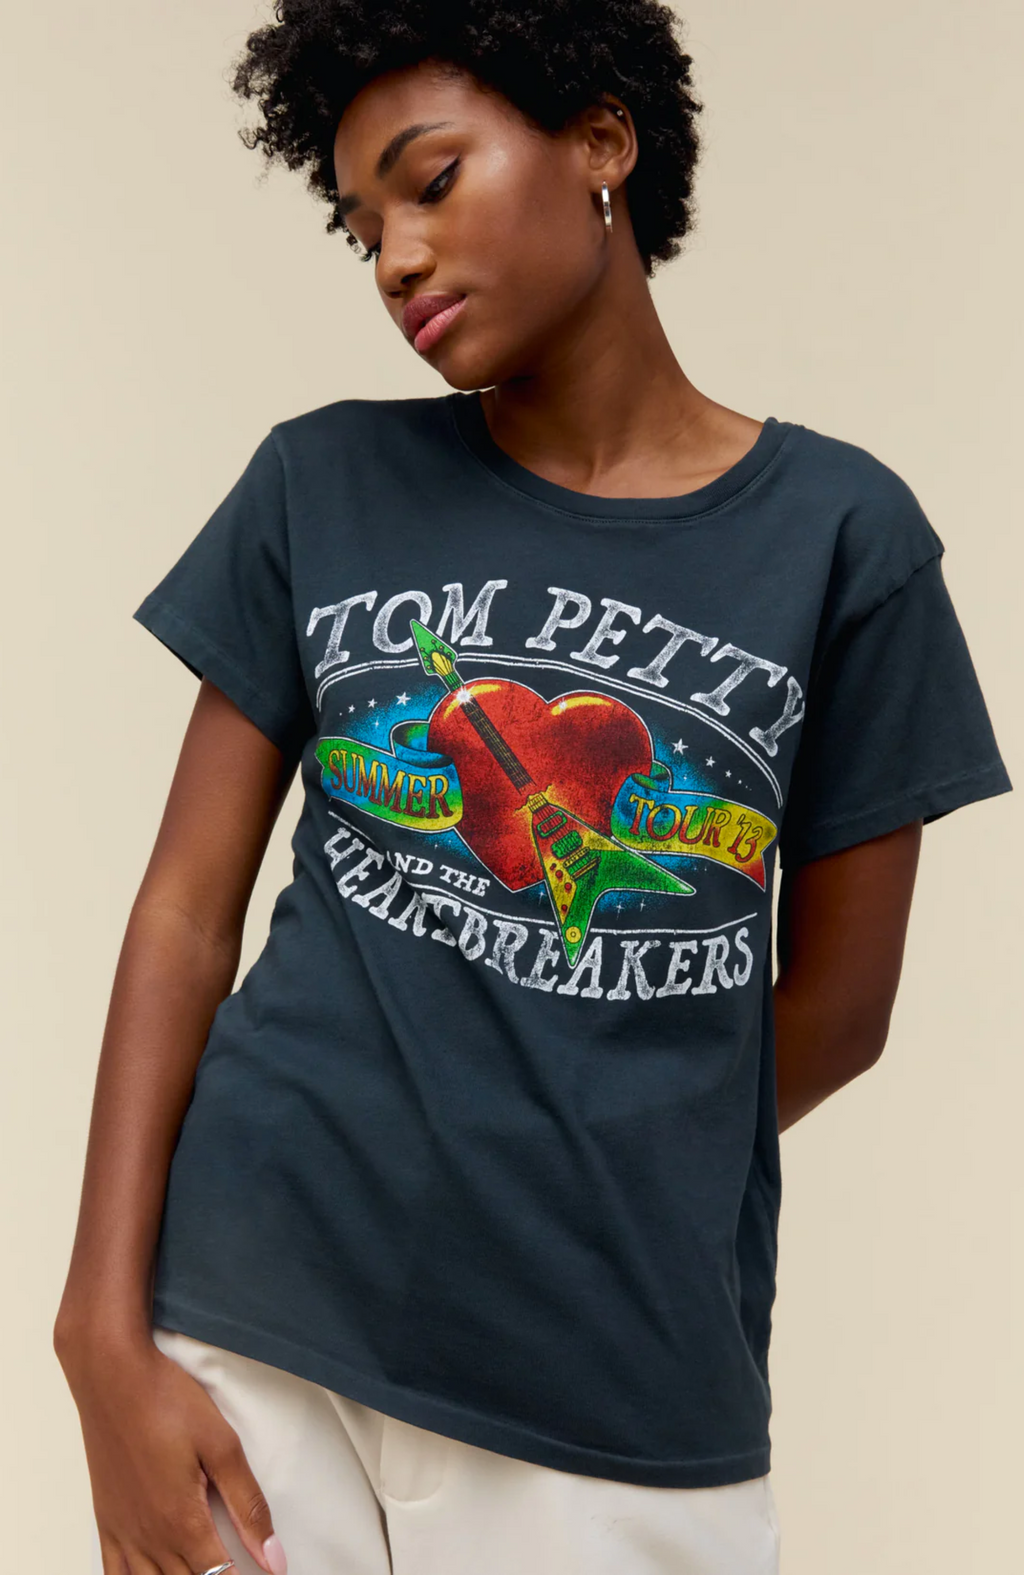 Daydreamer - Tom Petty Summer '13 Tour Tee